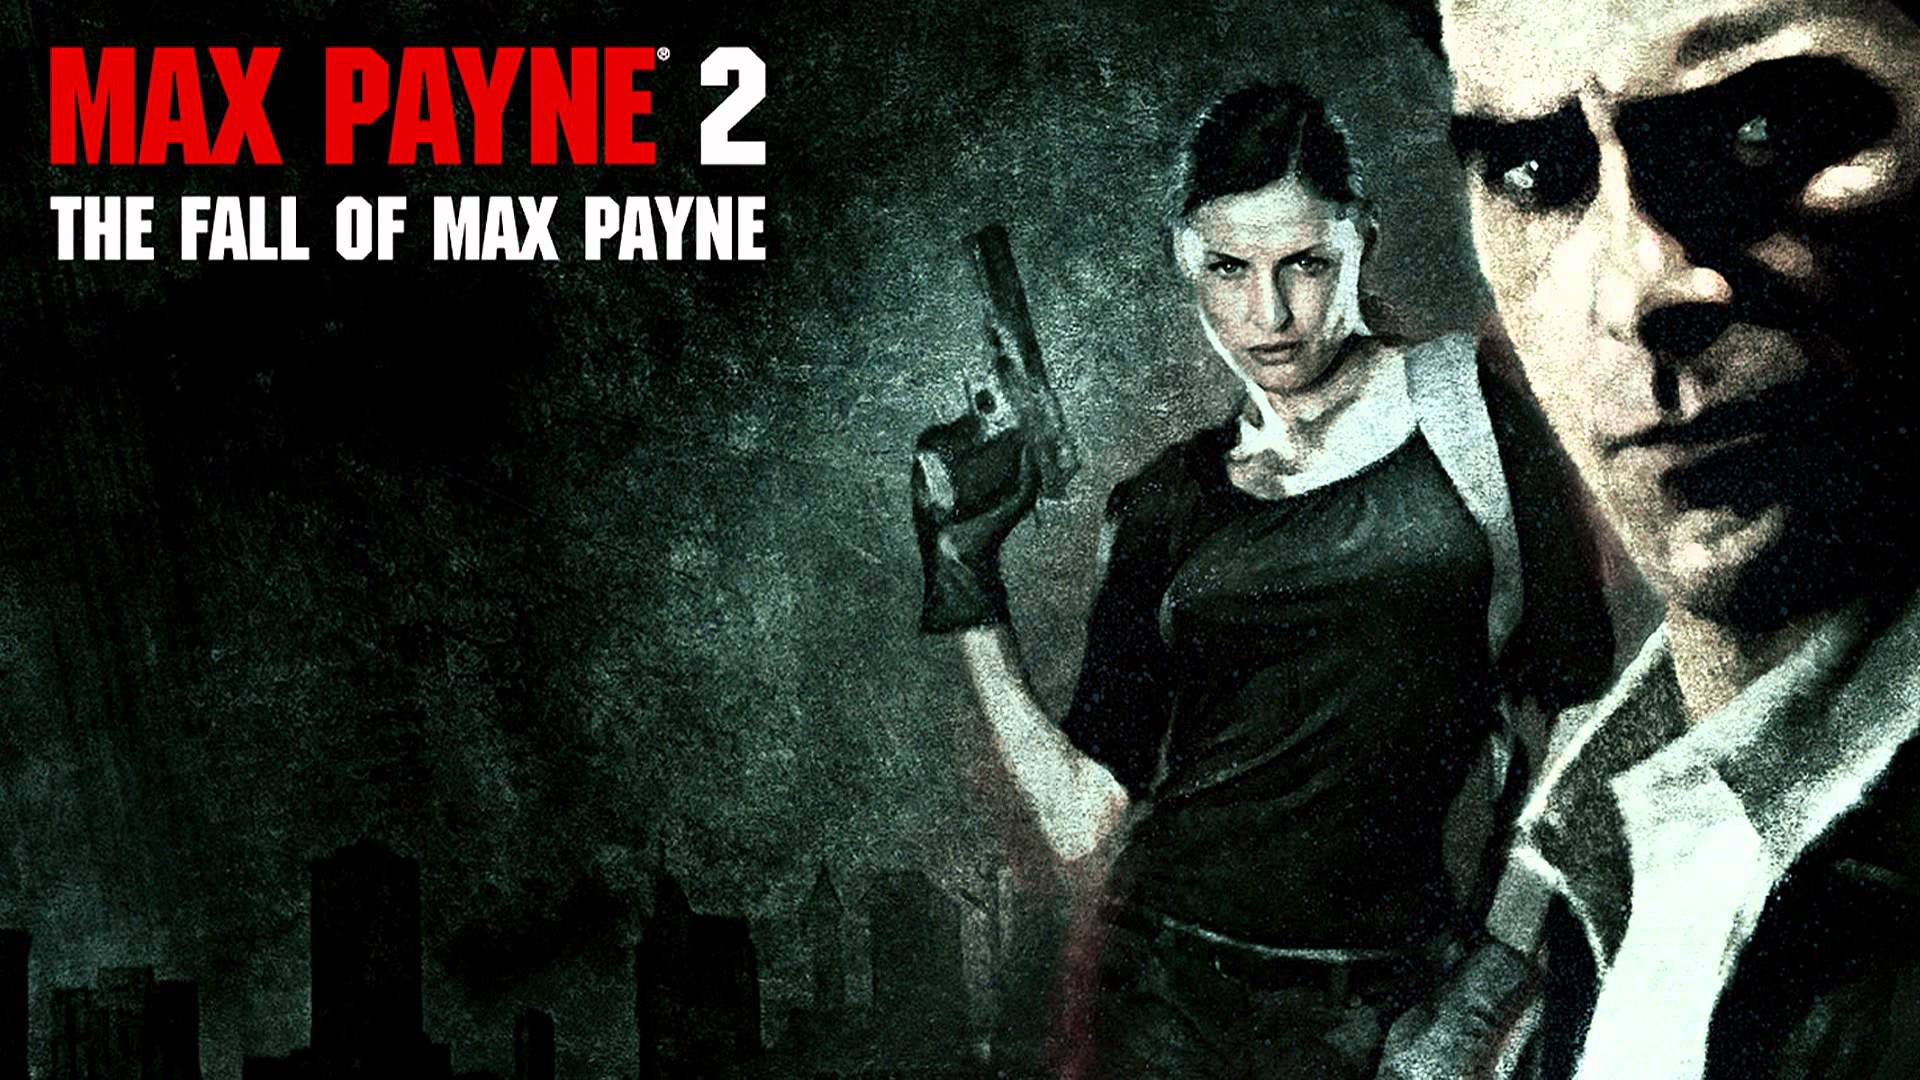 Max payne 2 movie release date asrposdeveloper